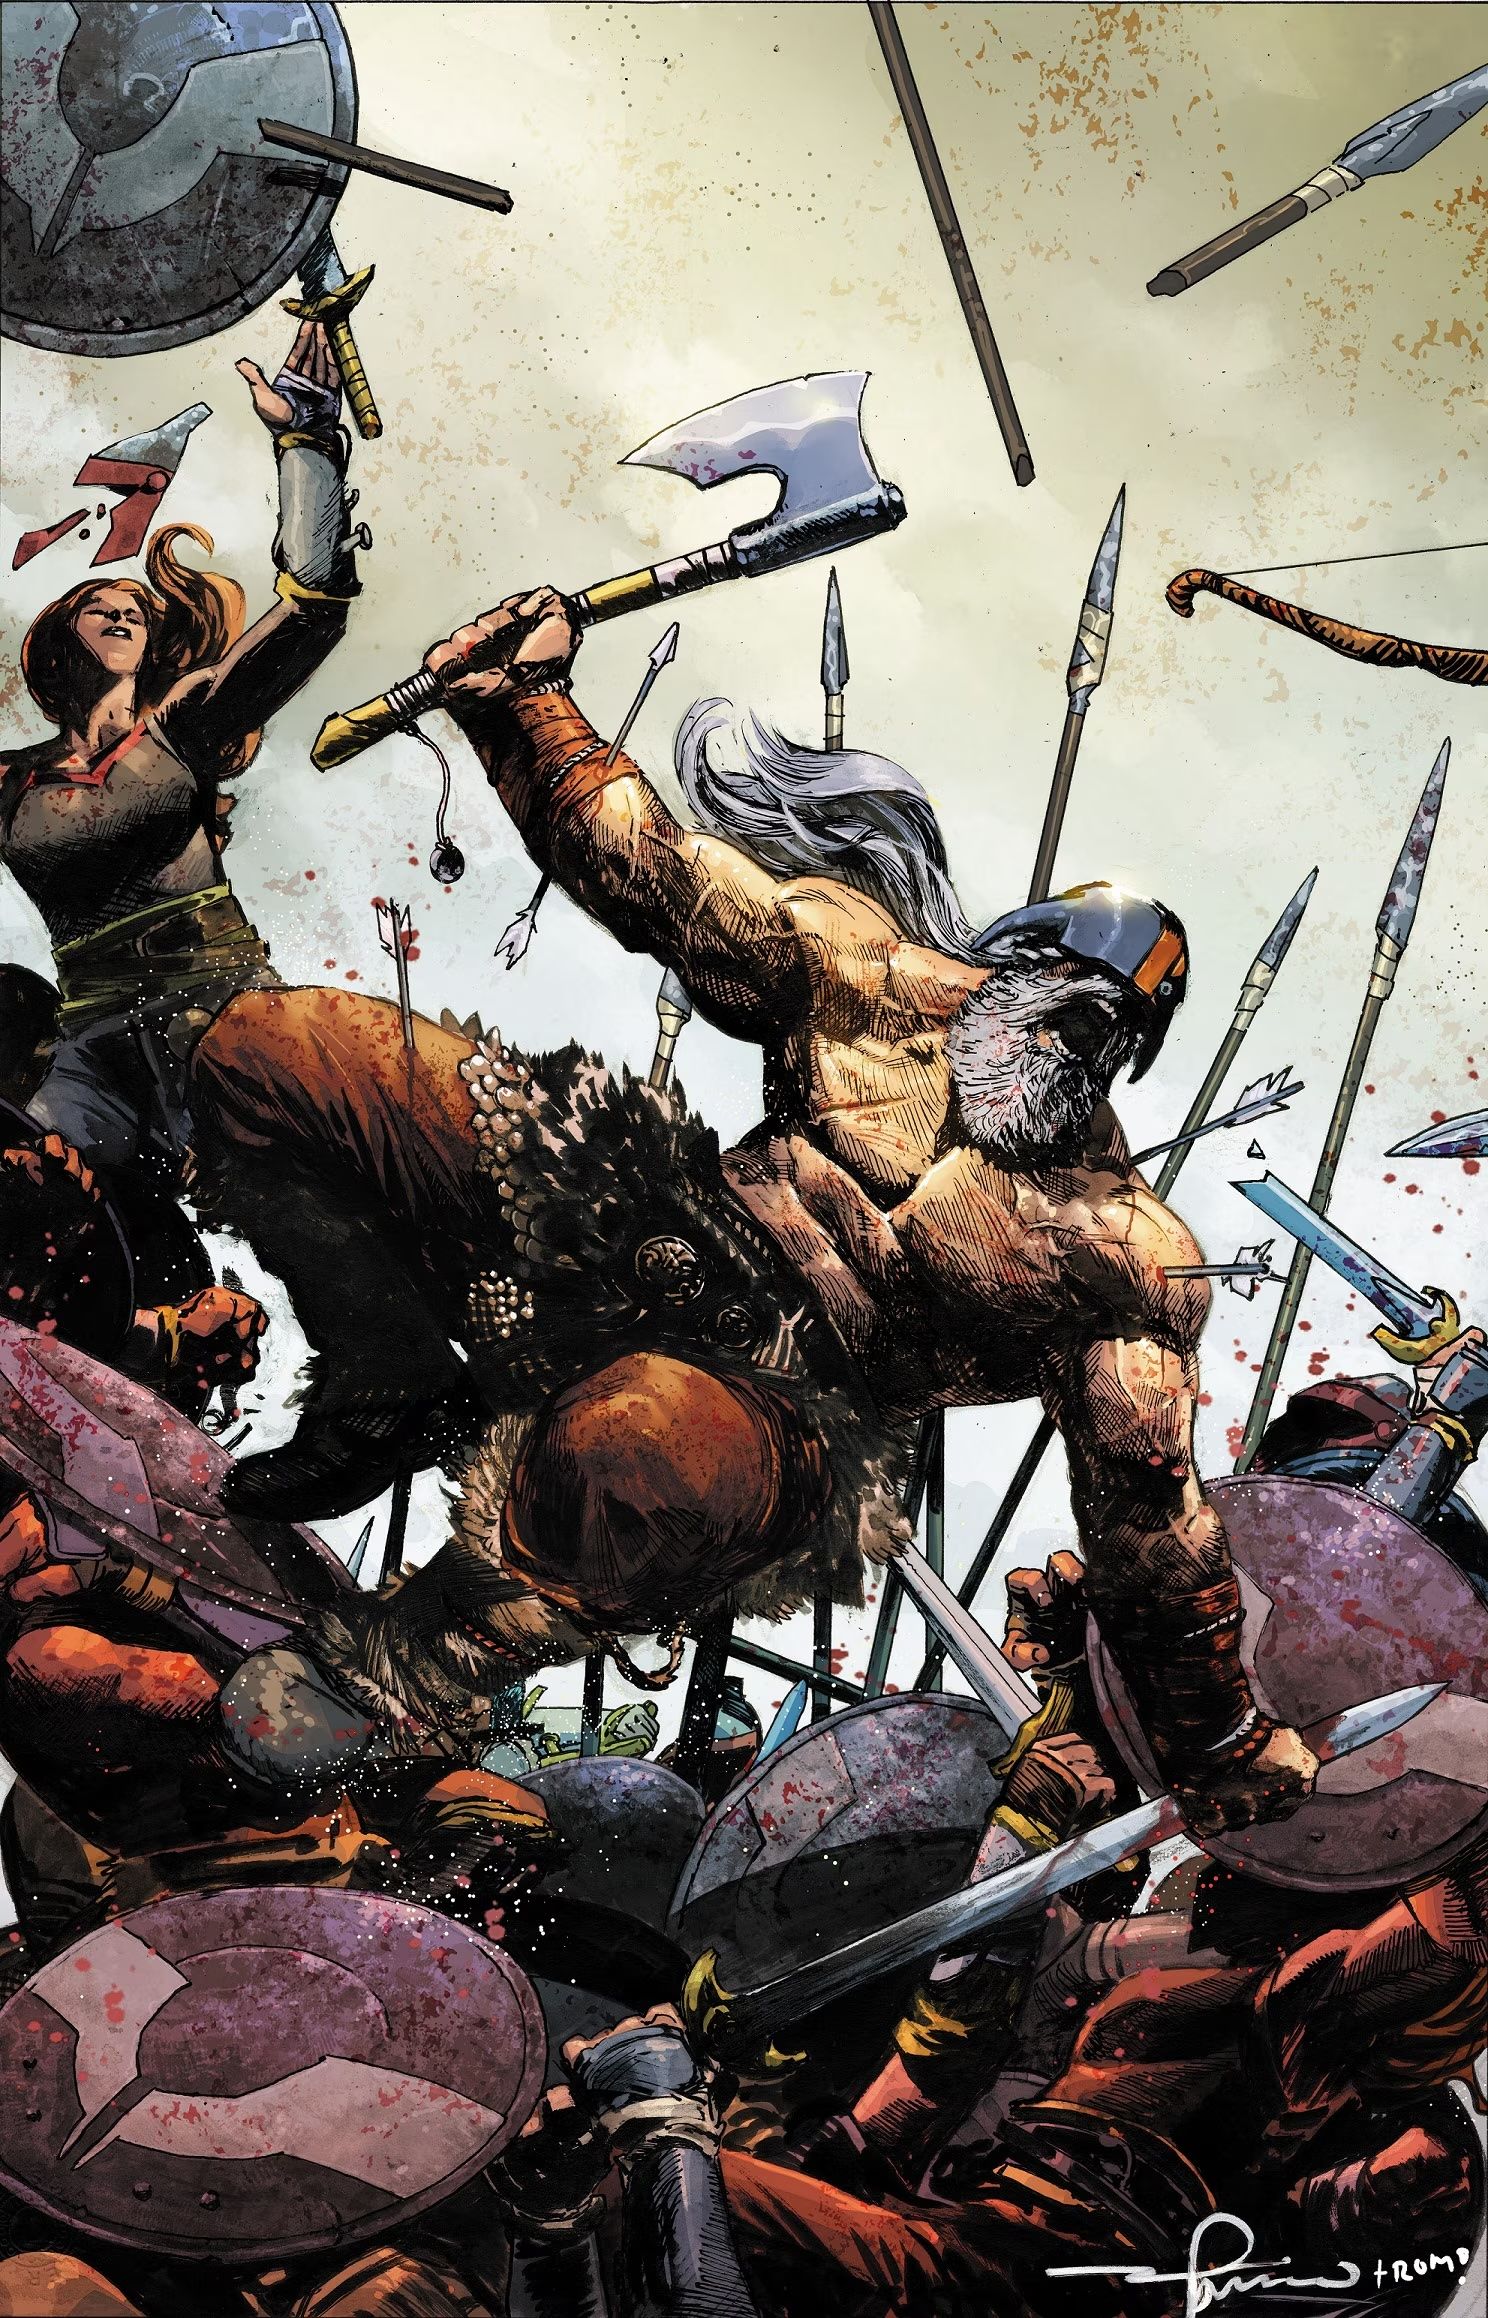 Dark Knights of Steel Allwinter 1 Zaffino Variant Cover: Viking Deathstroke em batalha.